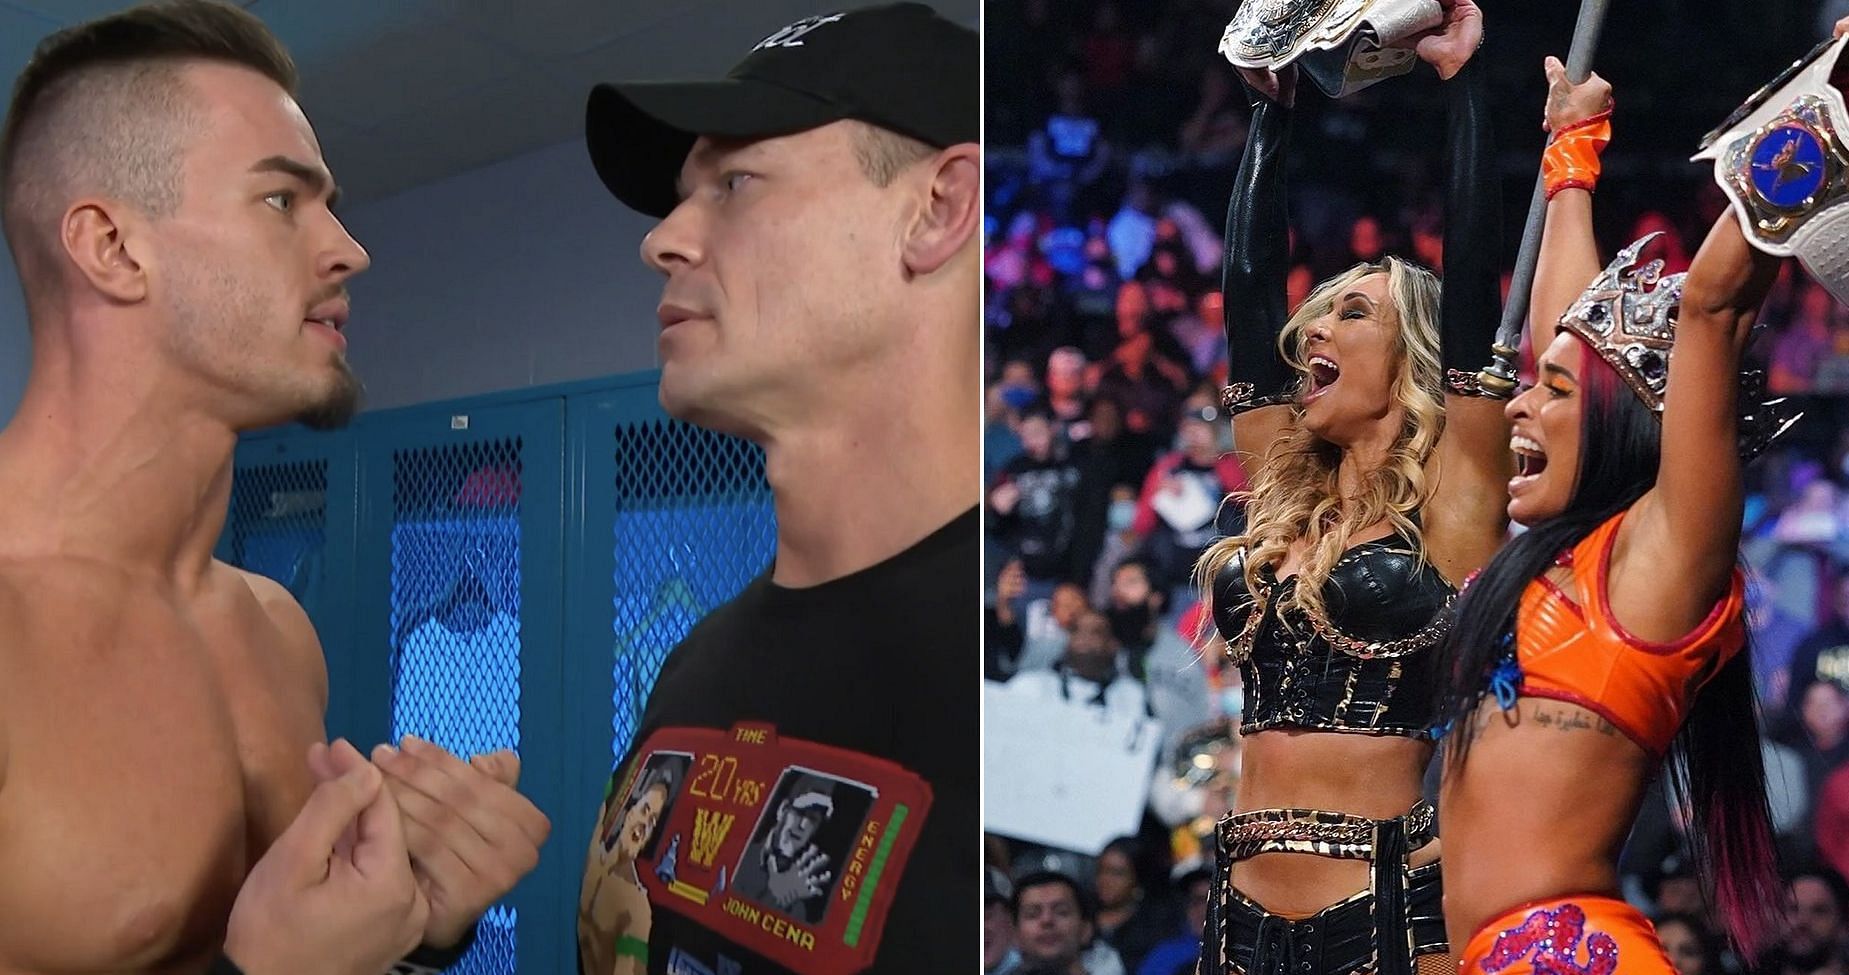 Will John Cena return again this weekend?